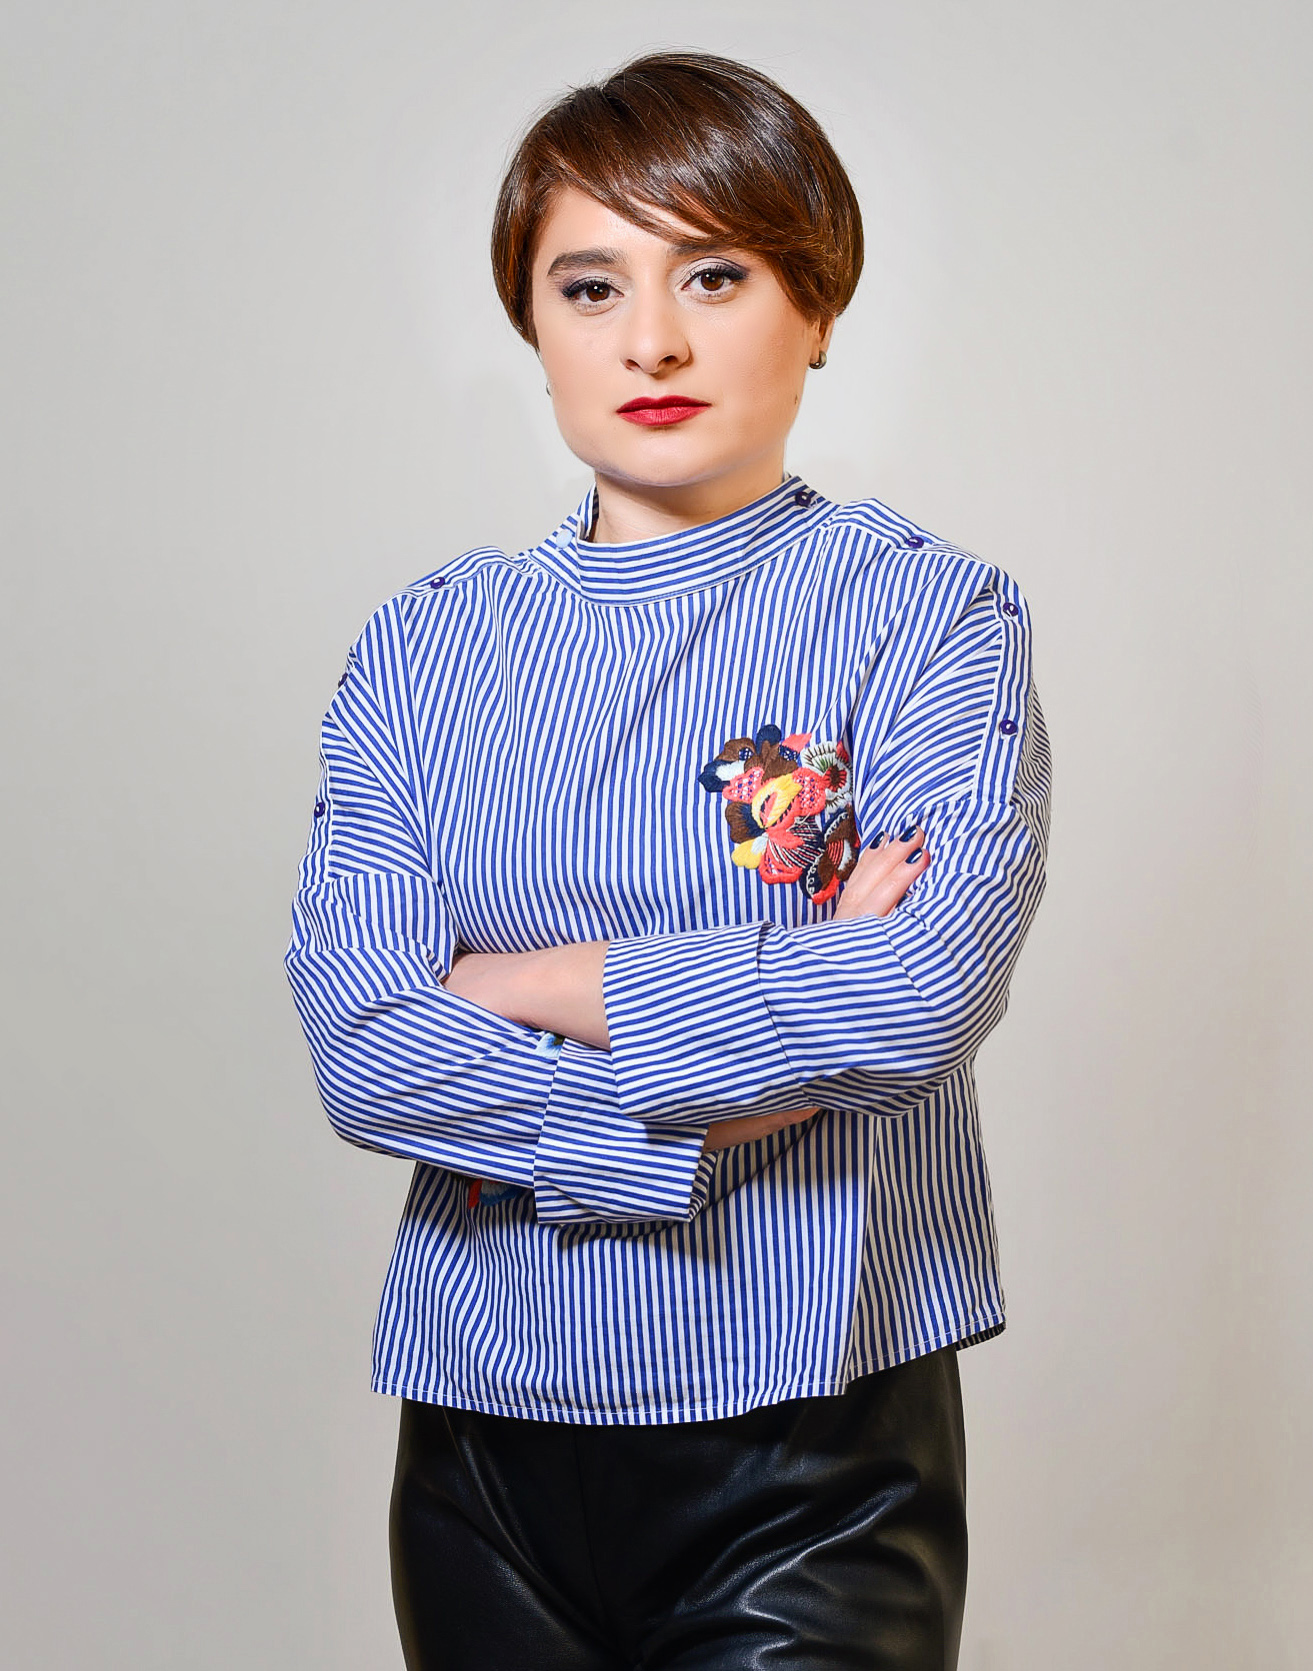 Tamuna Mangoshvili